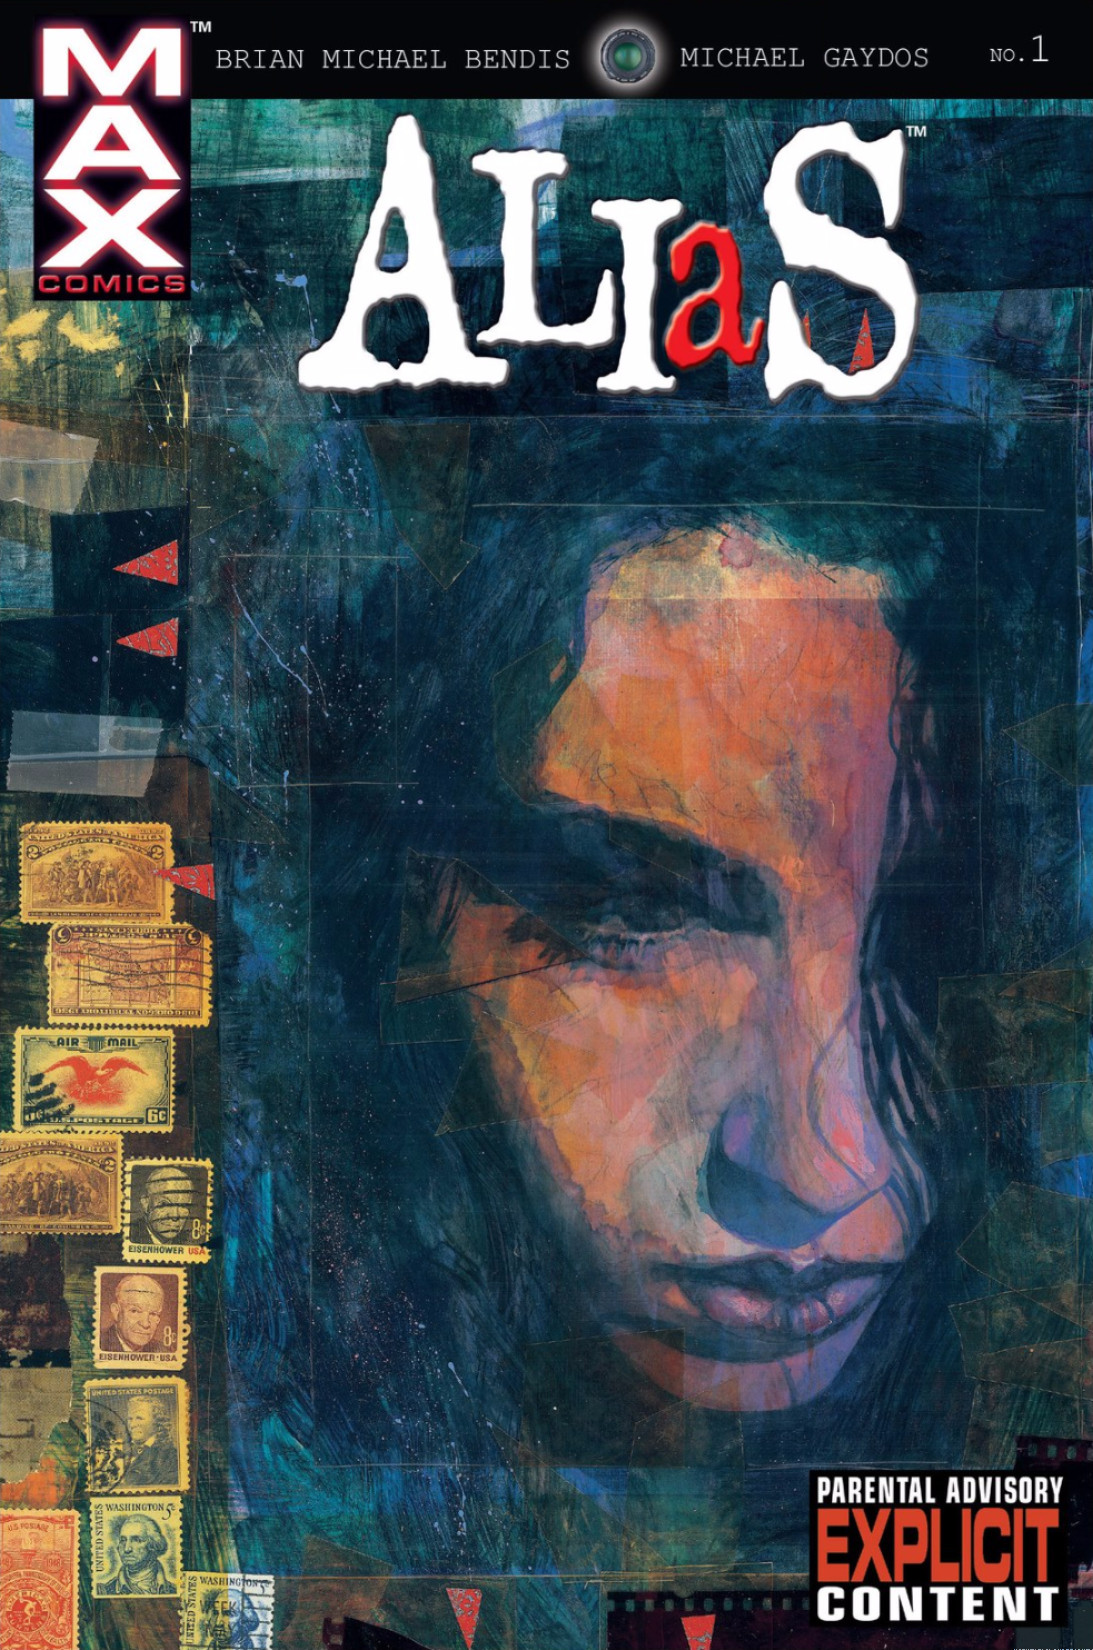 The cover of Alias #1, Marvel Comics.